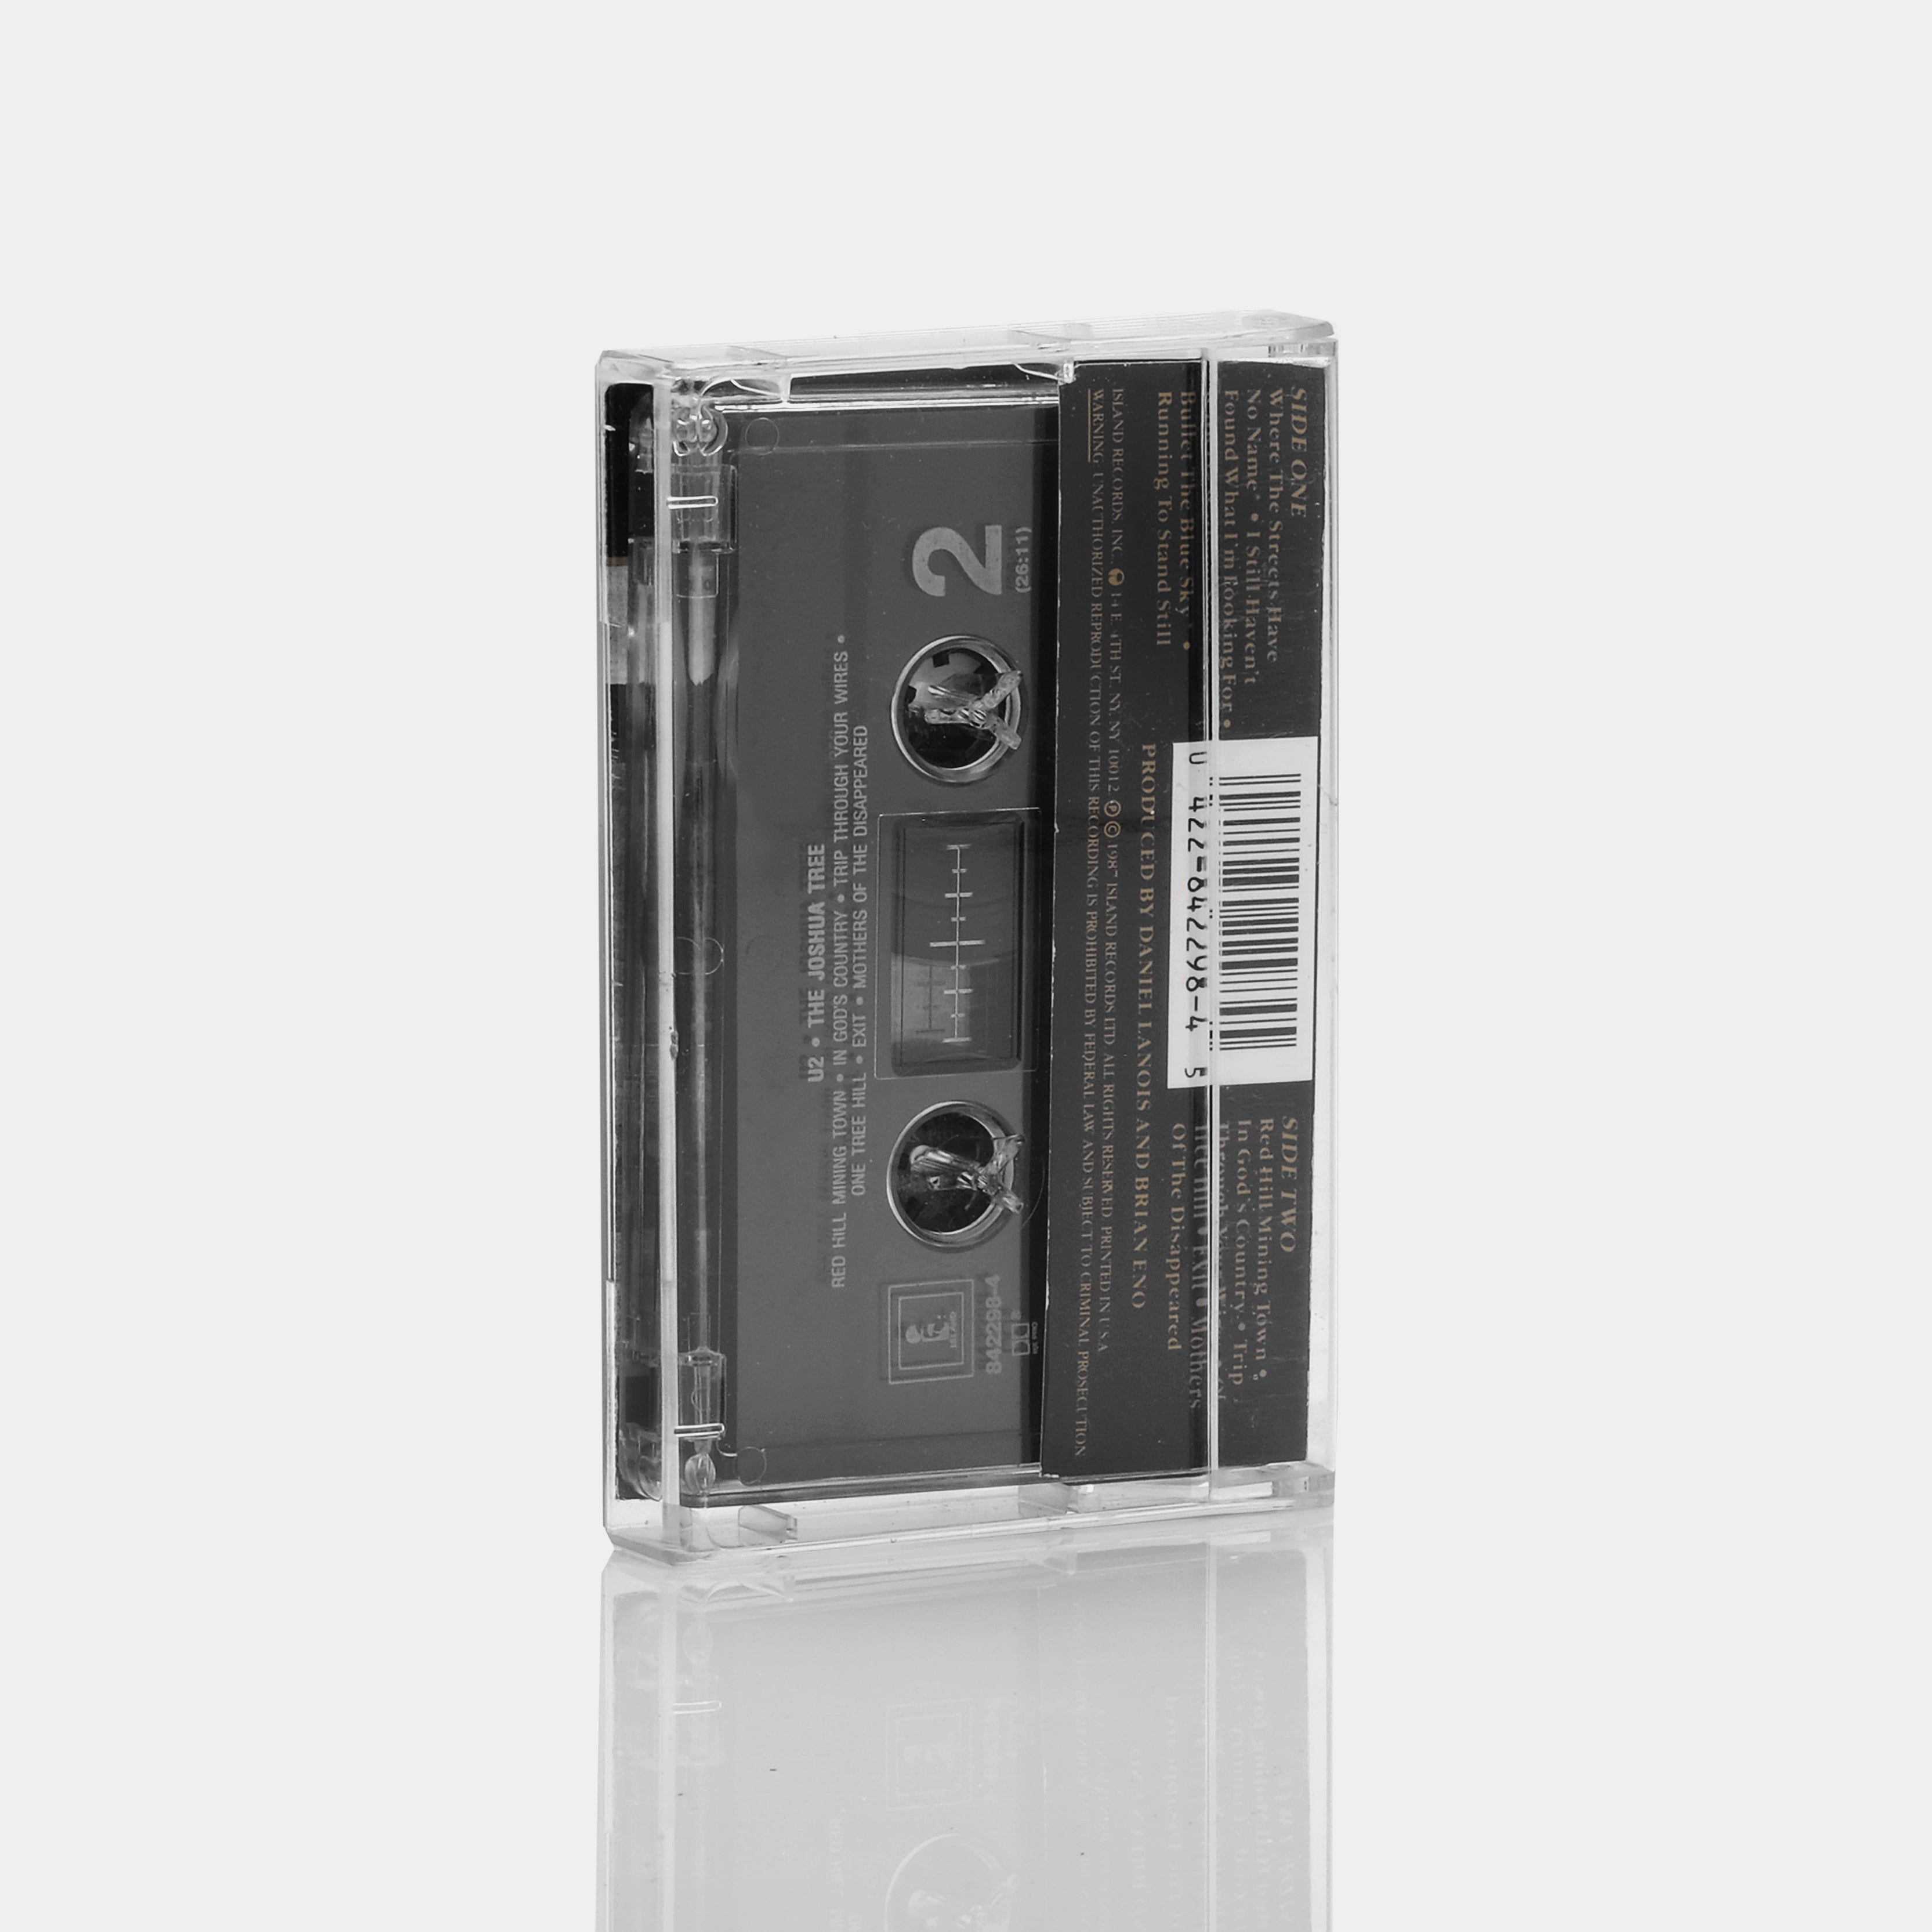 U2 - The Joshua Tree Cassette Tape